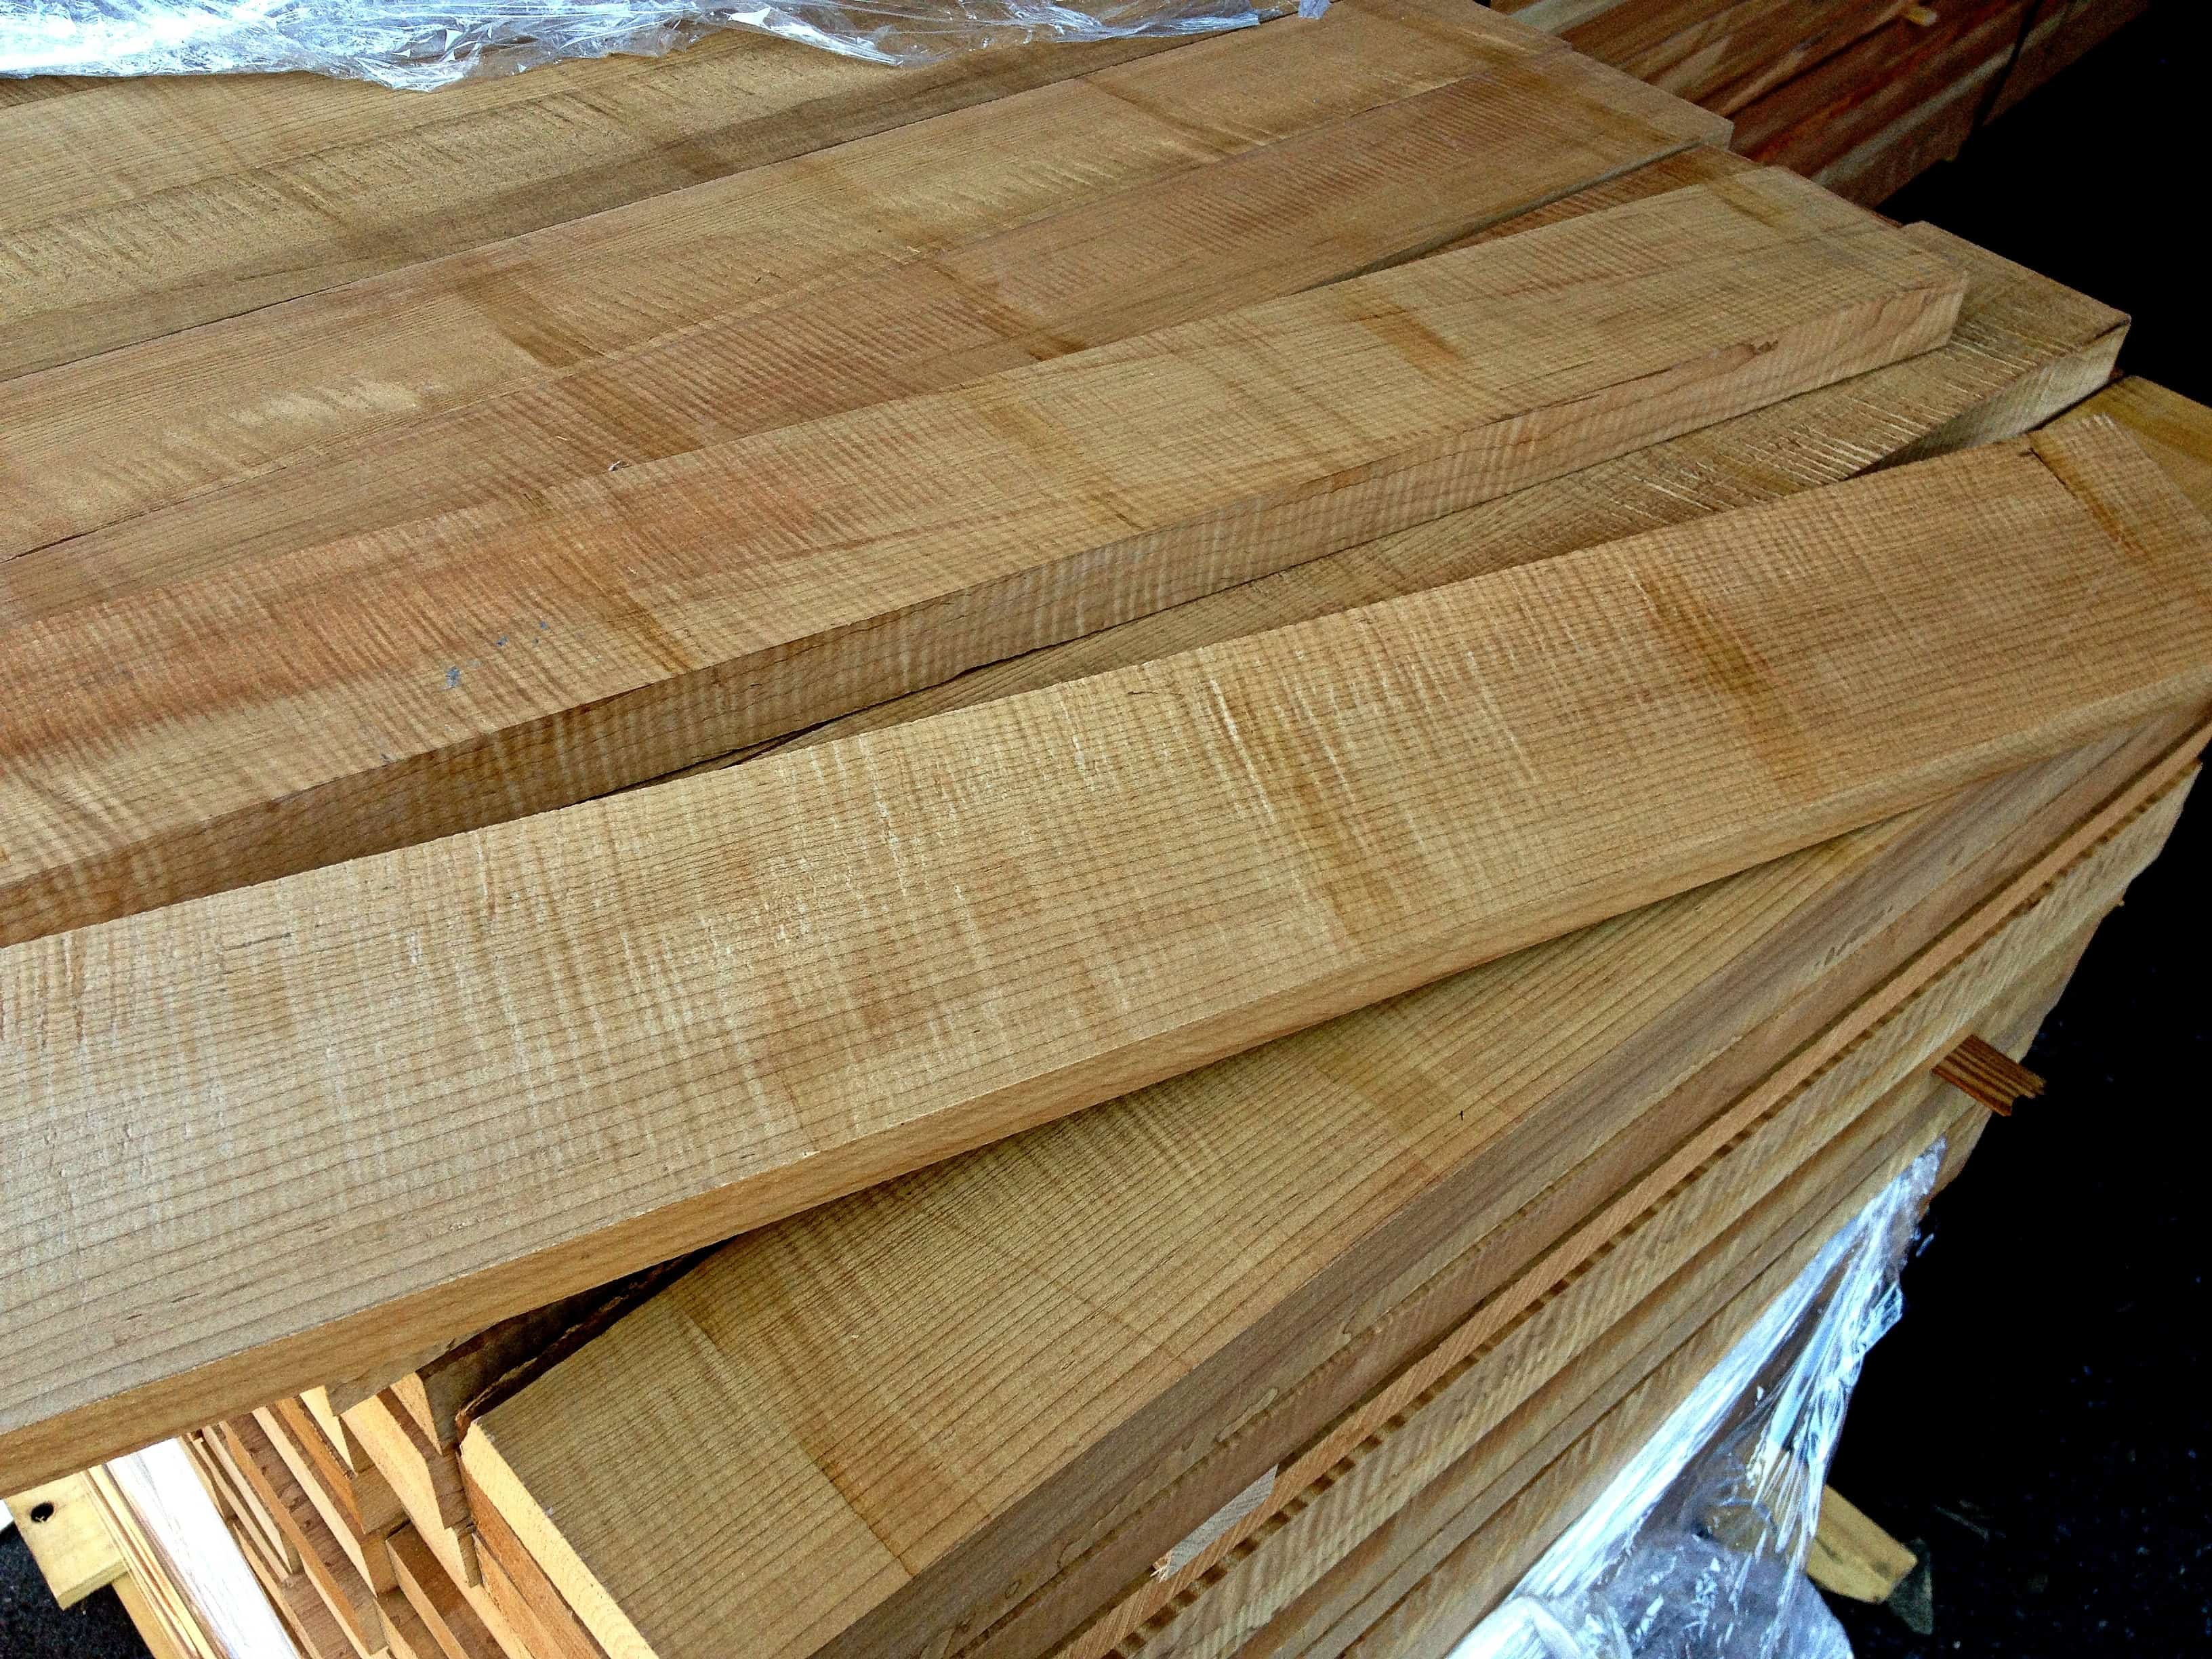 Birdseye Maple - Exotic Wood - Acer saccharum